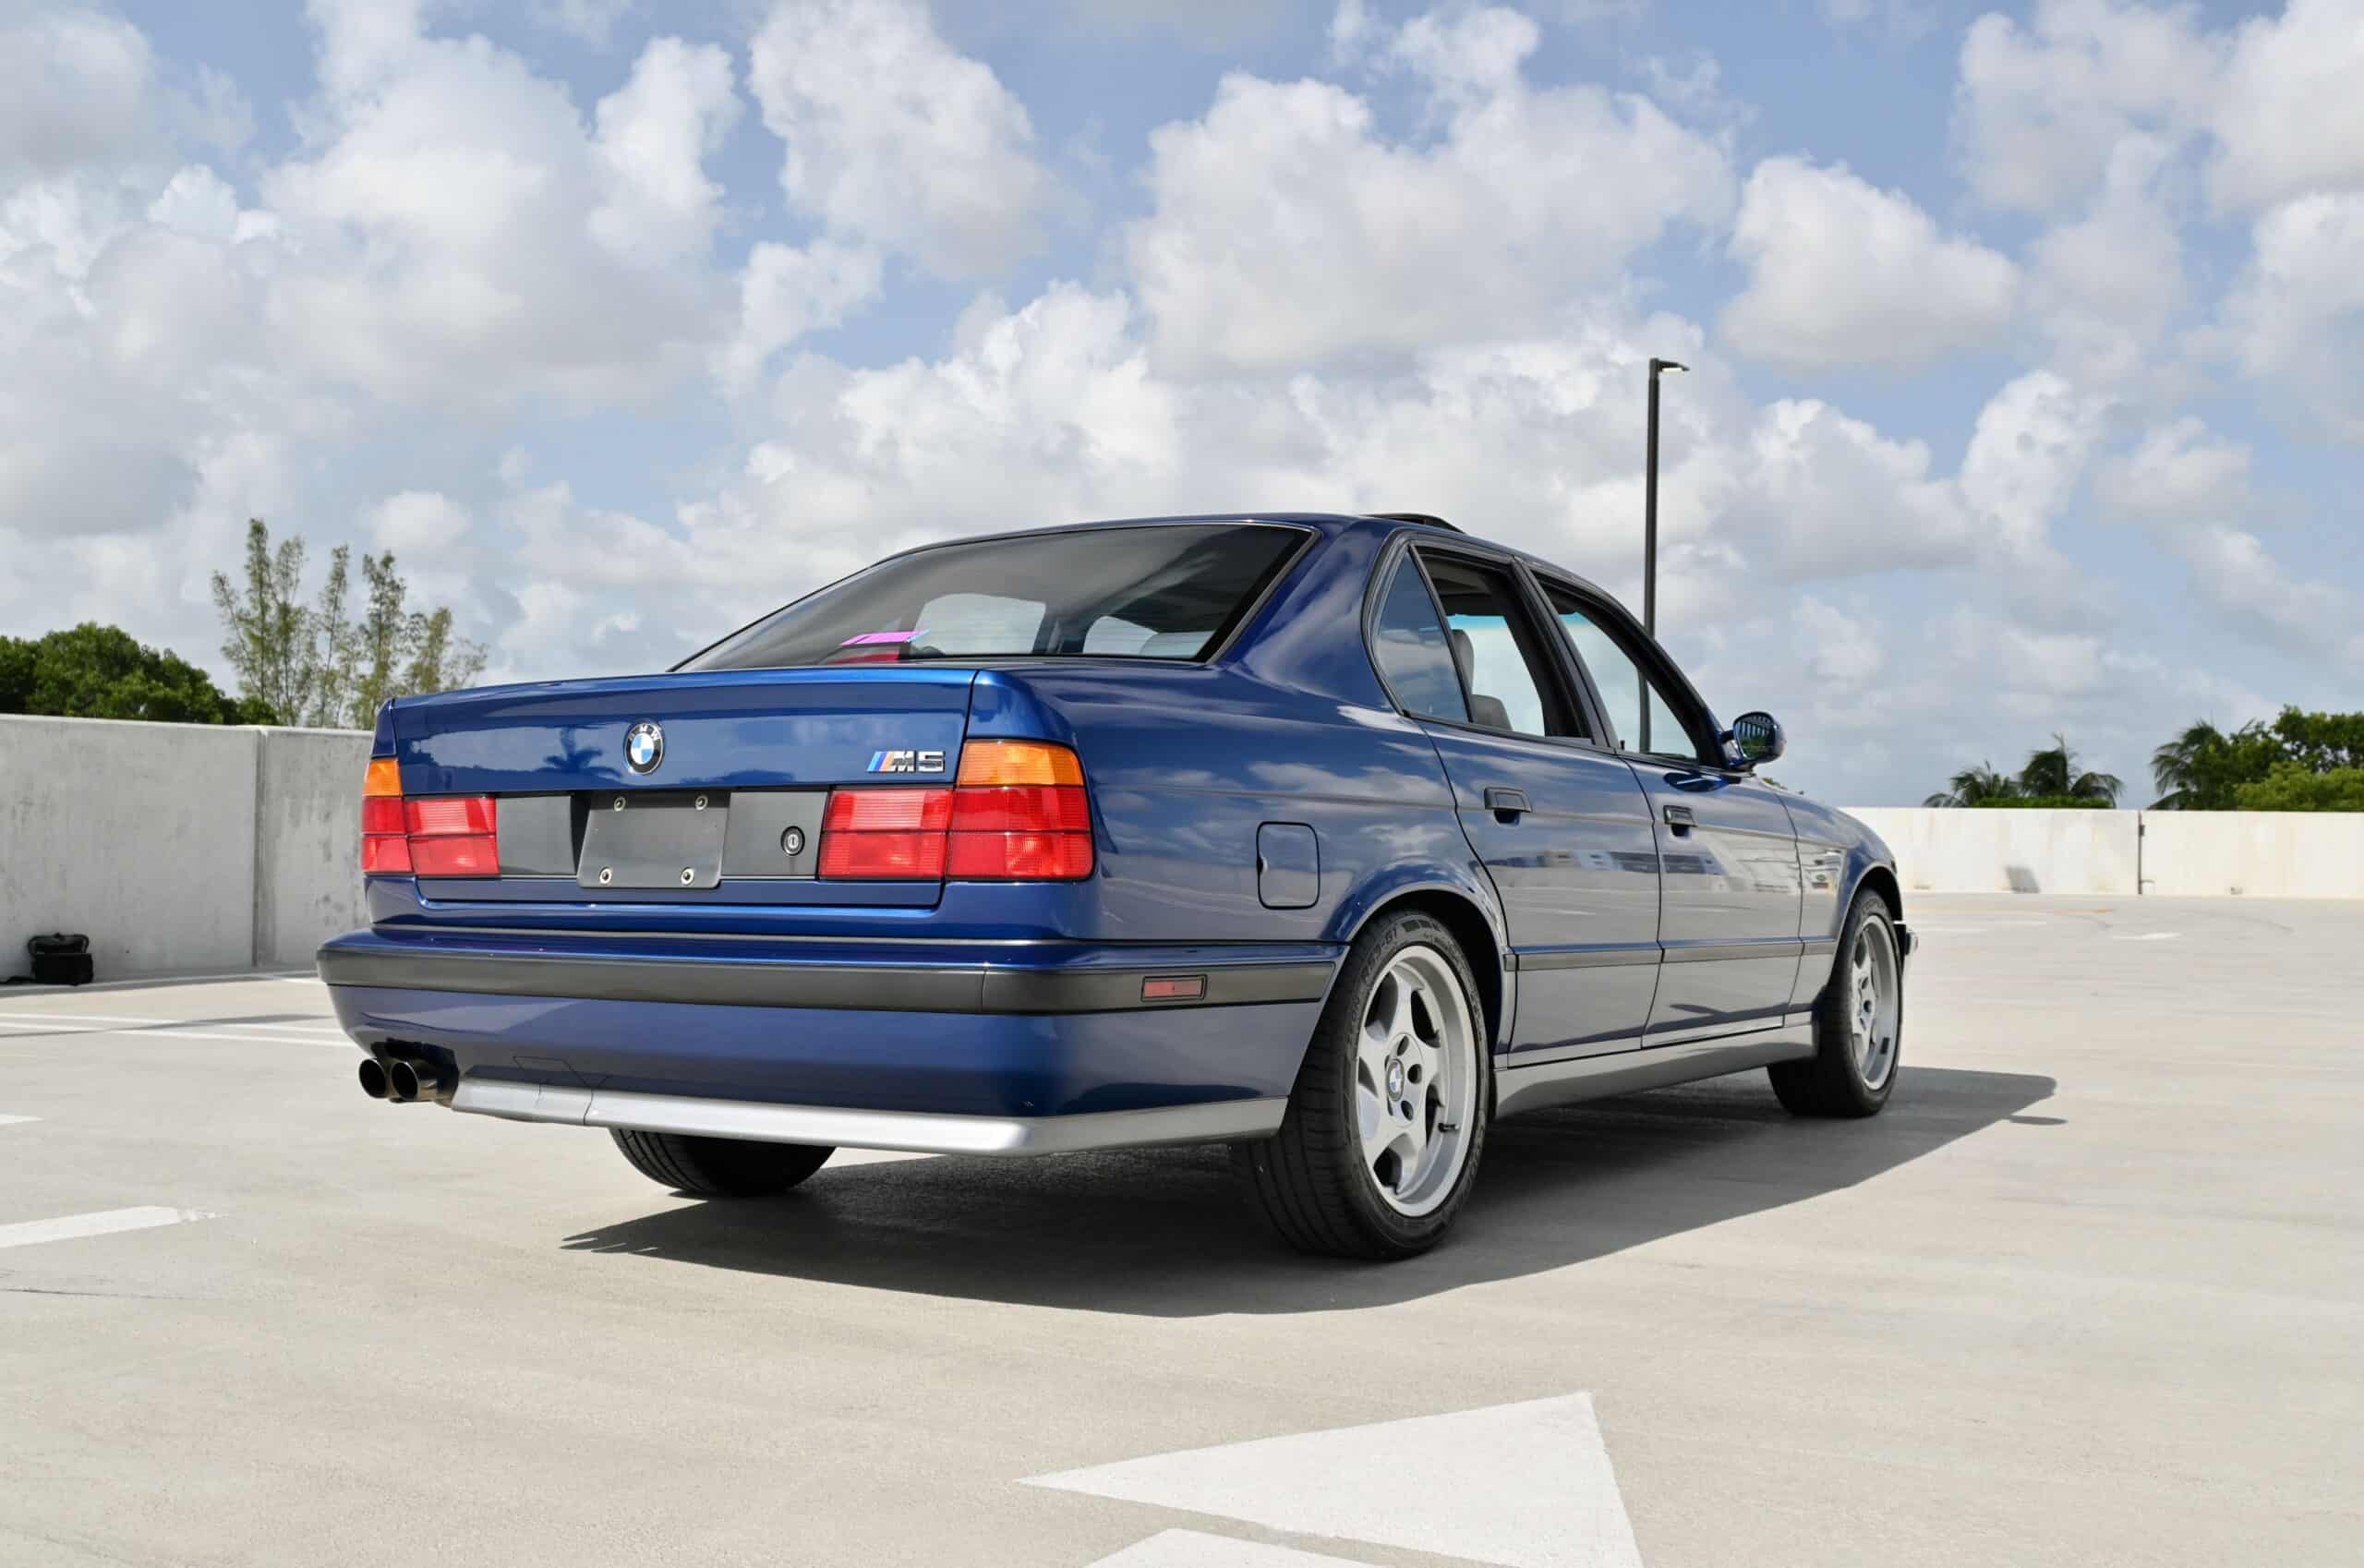 1993 BMW M5 M5 Avusblau Metallic | E34 M5 | S38 5-spd Manual | All Stock | $29,000 in Receipts | All Service Records Since 1998 |